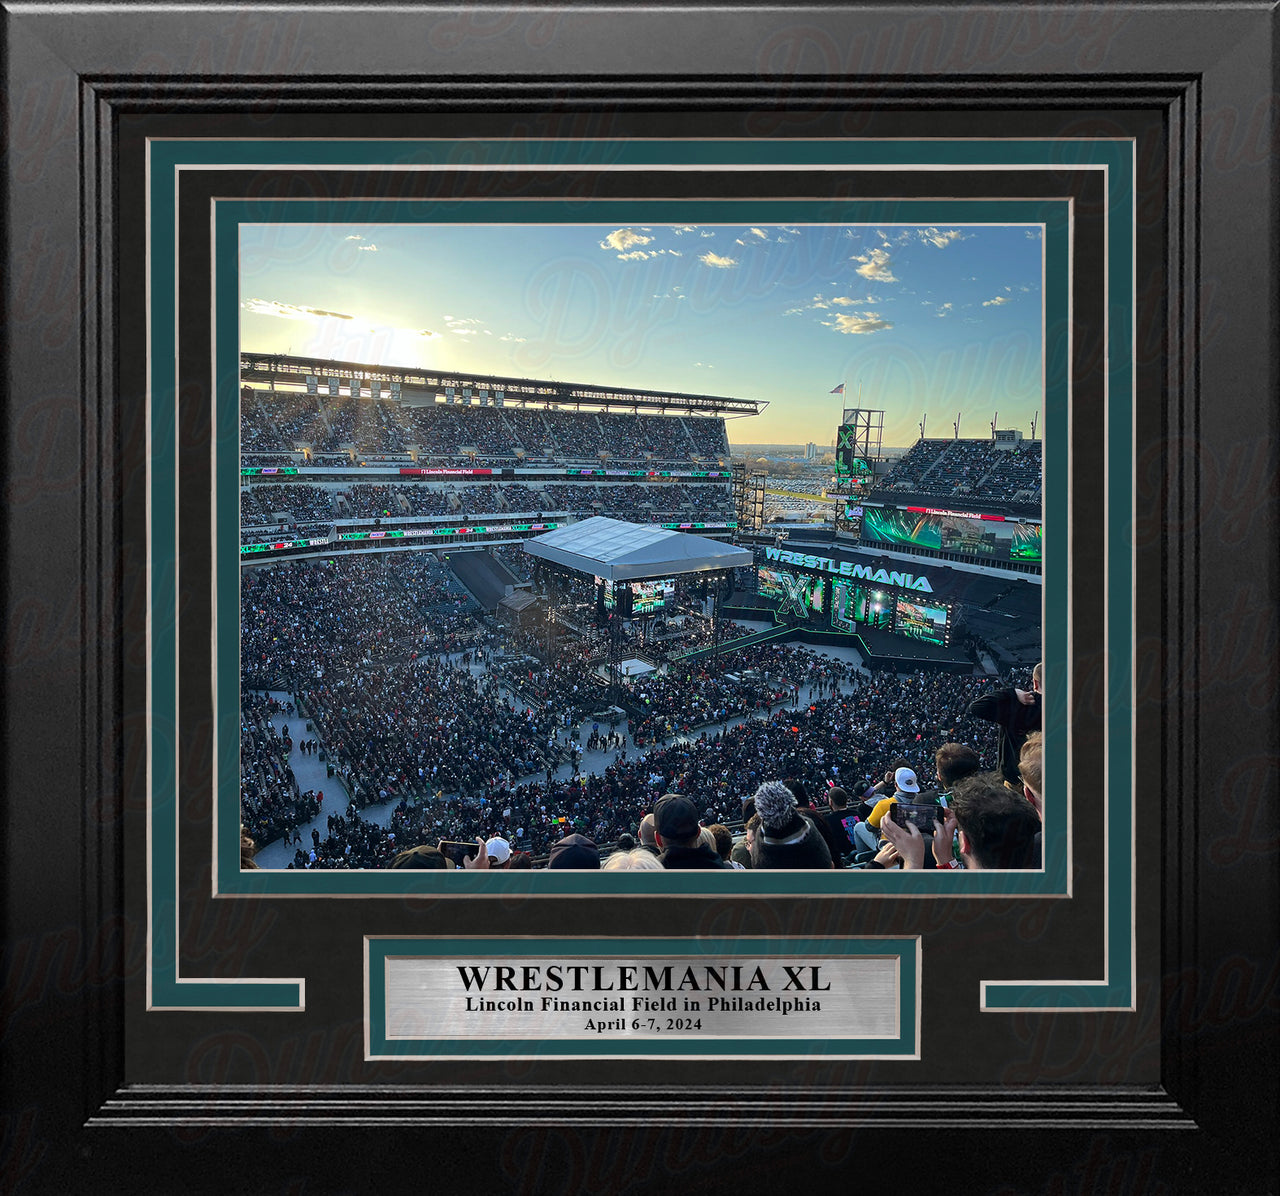 WrestleMania XL at Lincoln Financial Field 8" x 10" Framed WWE Wrestling Stadium Photo